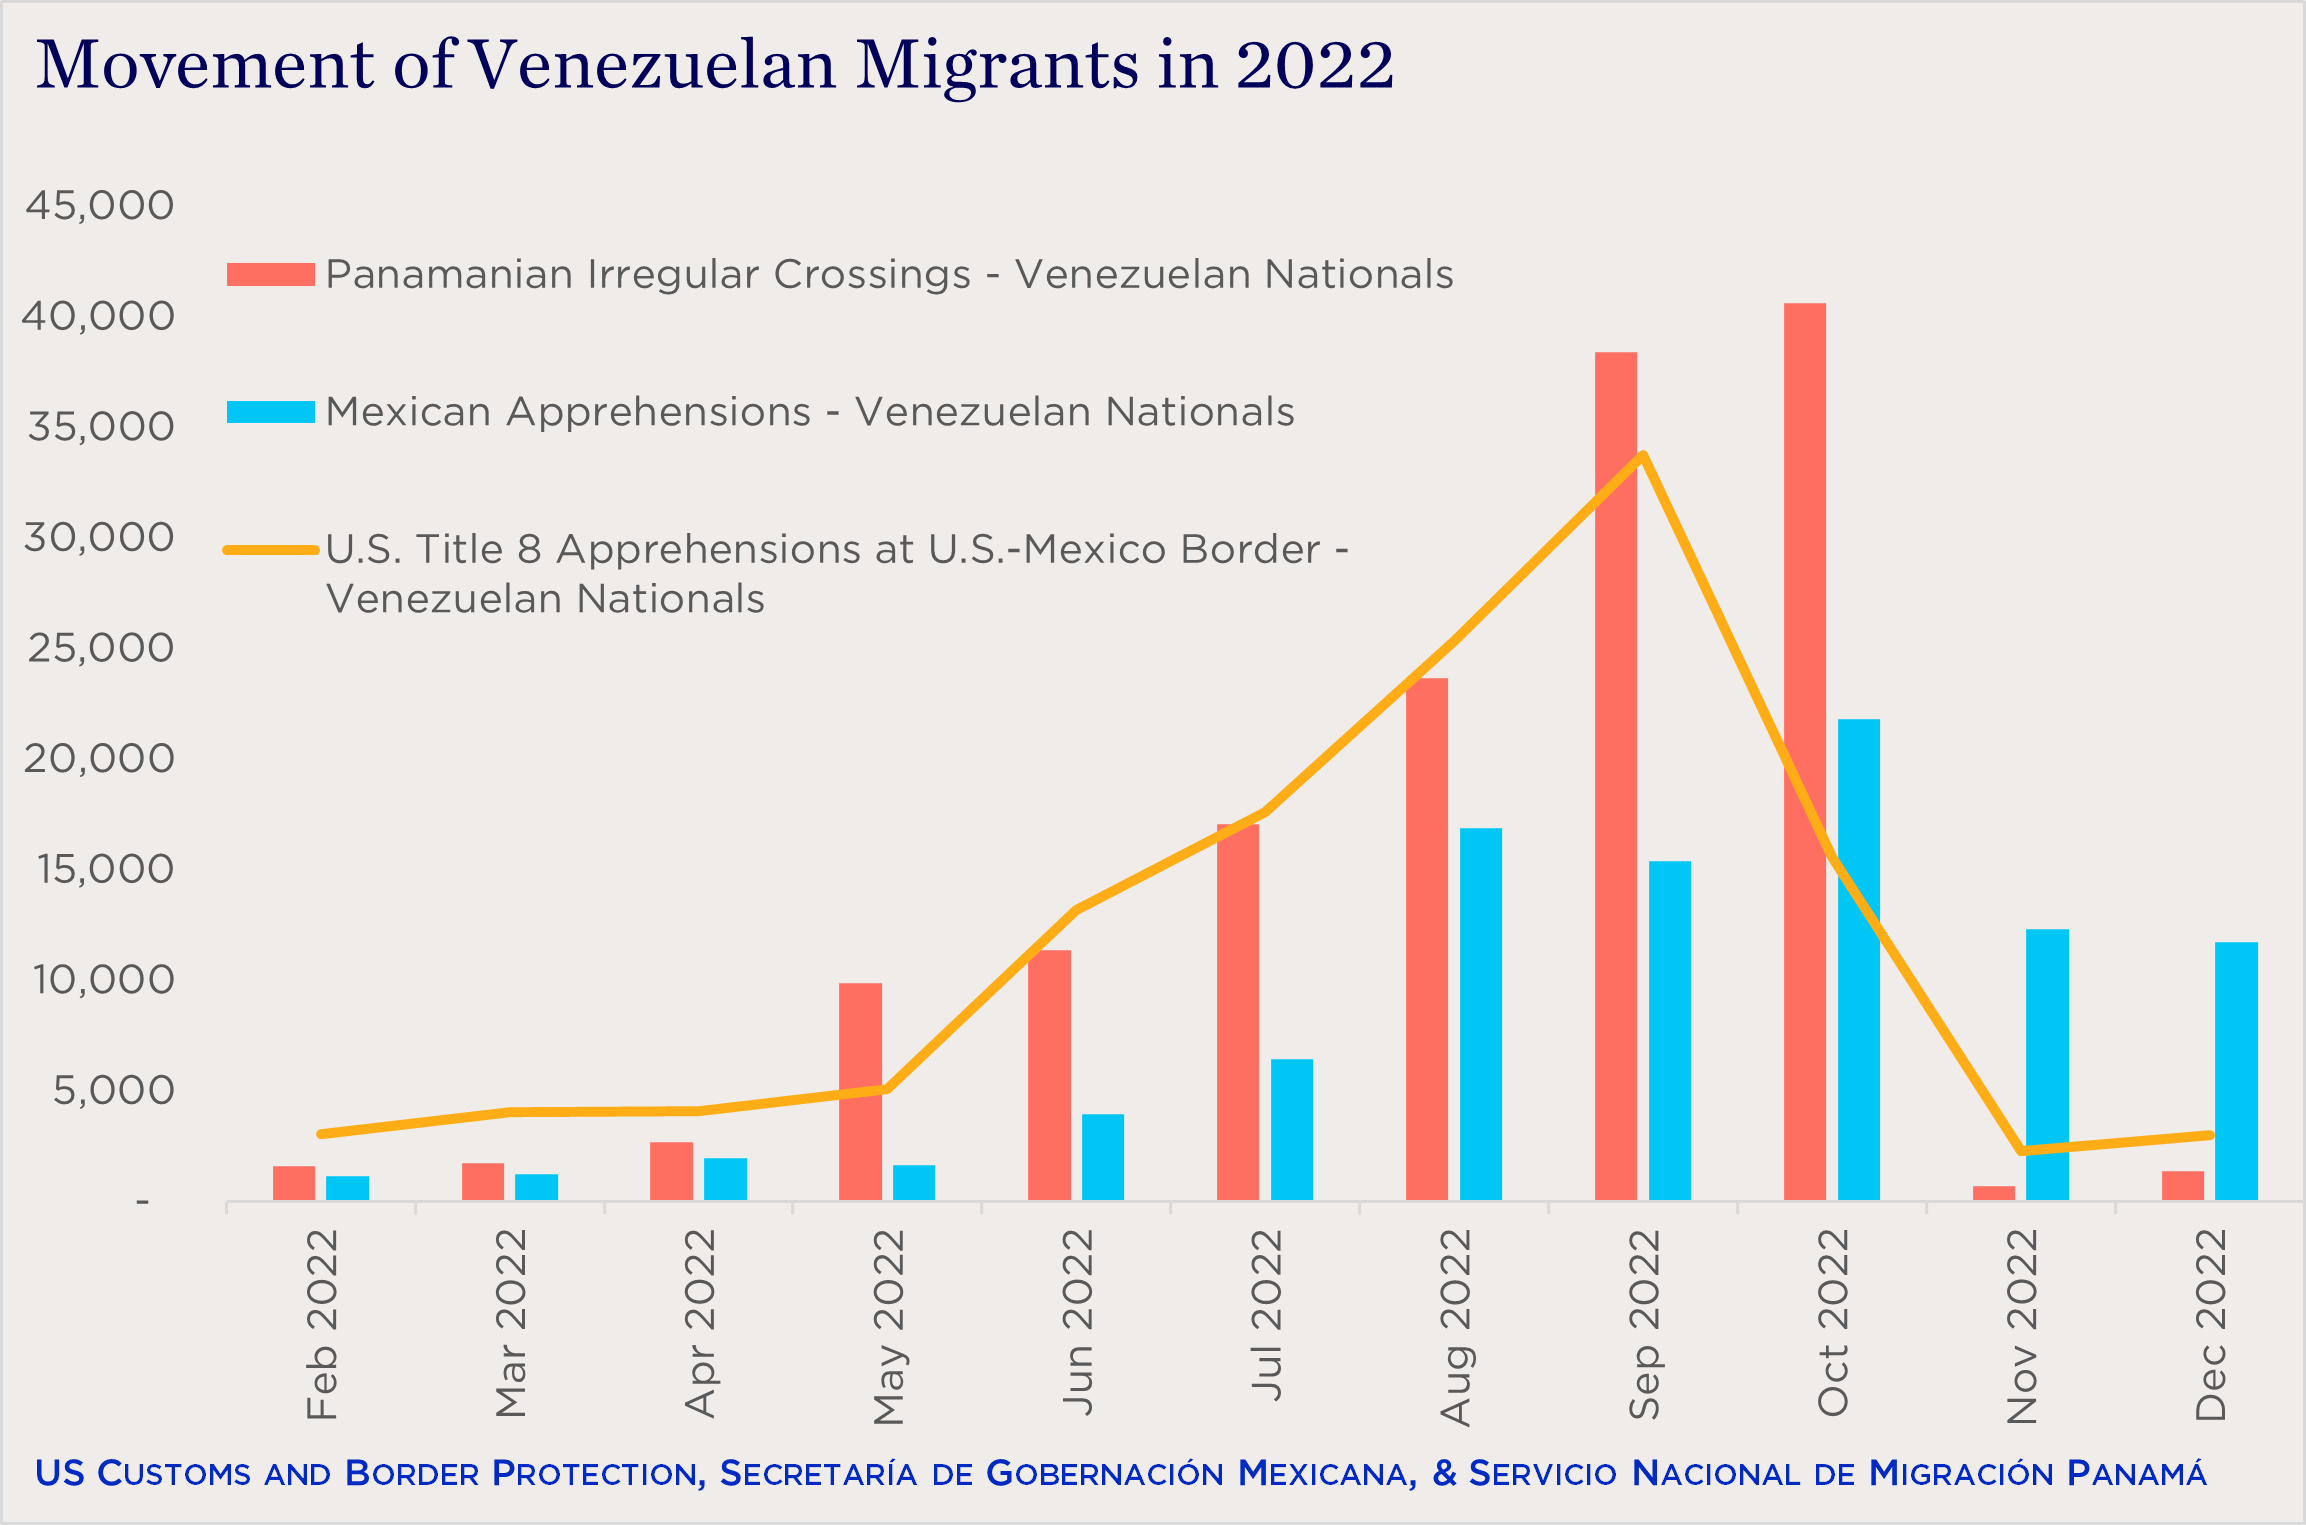 "bar chart showing movement of Venezuelan migrants over time"